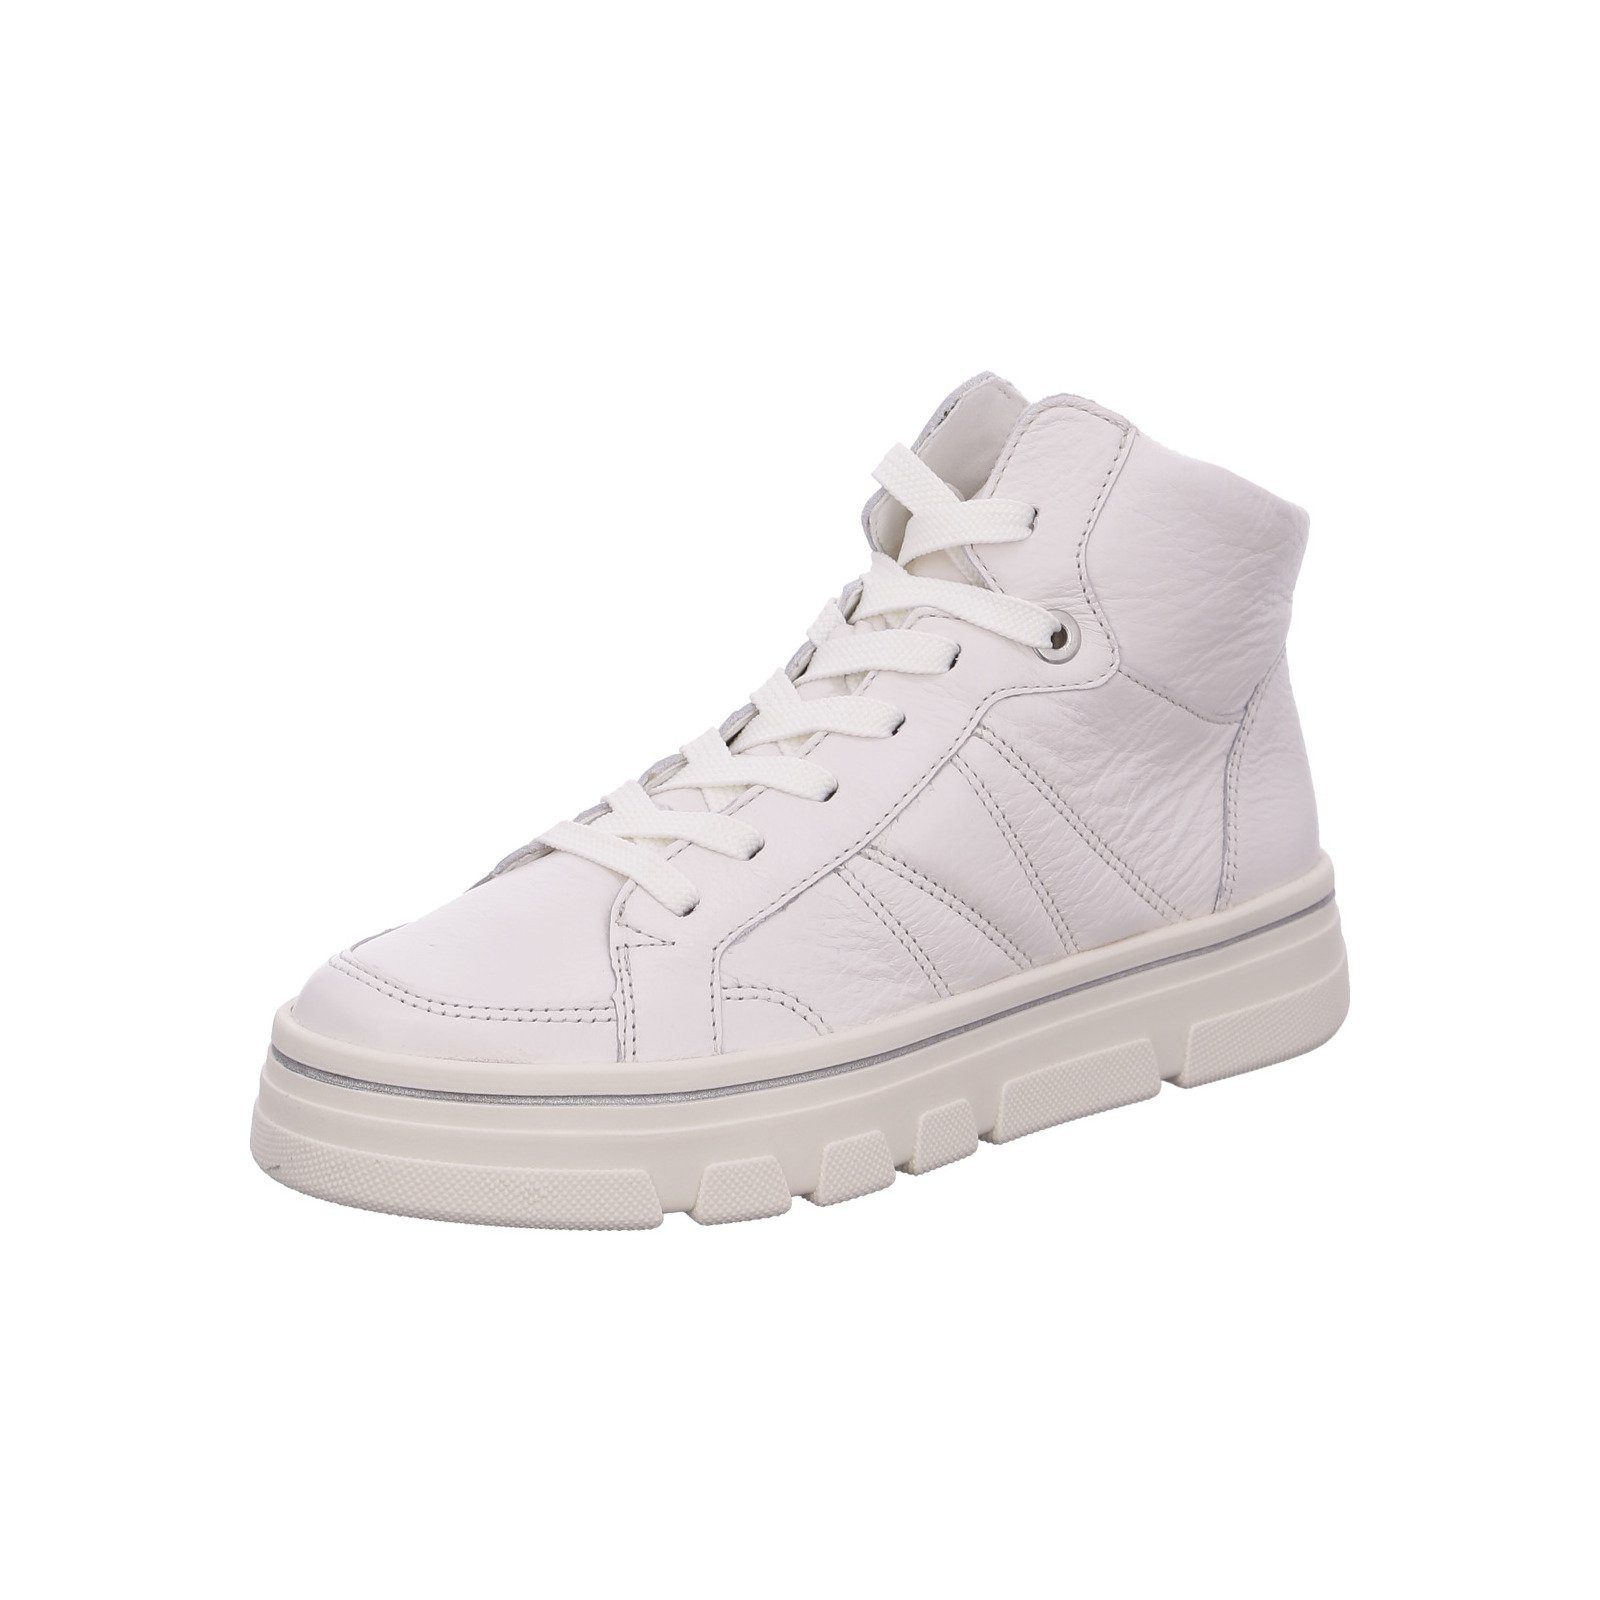 Ara Canberra - Damen Schuhe Sneaker Stiefeletten Leder weiß